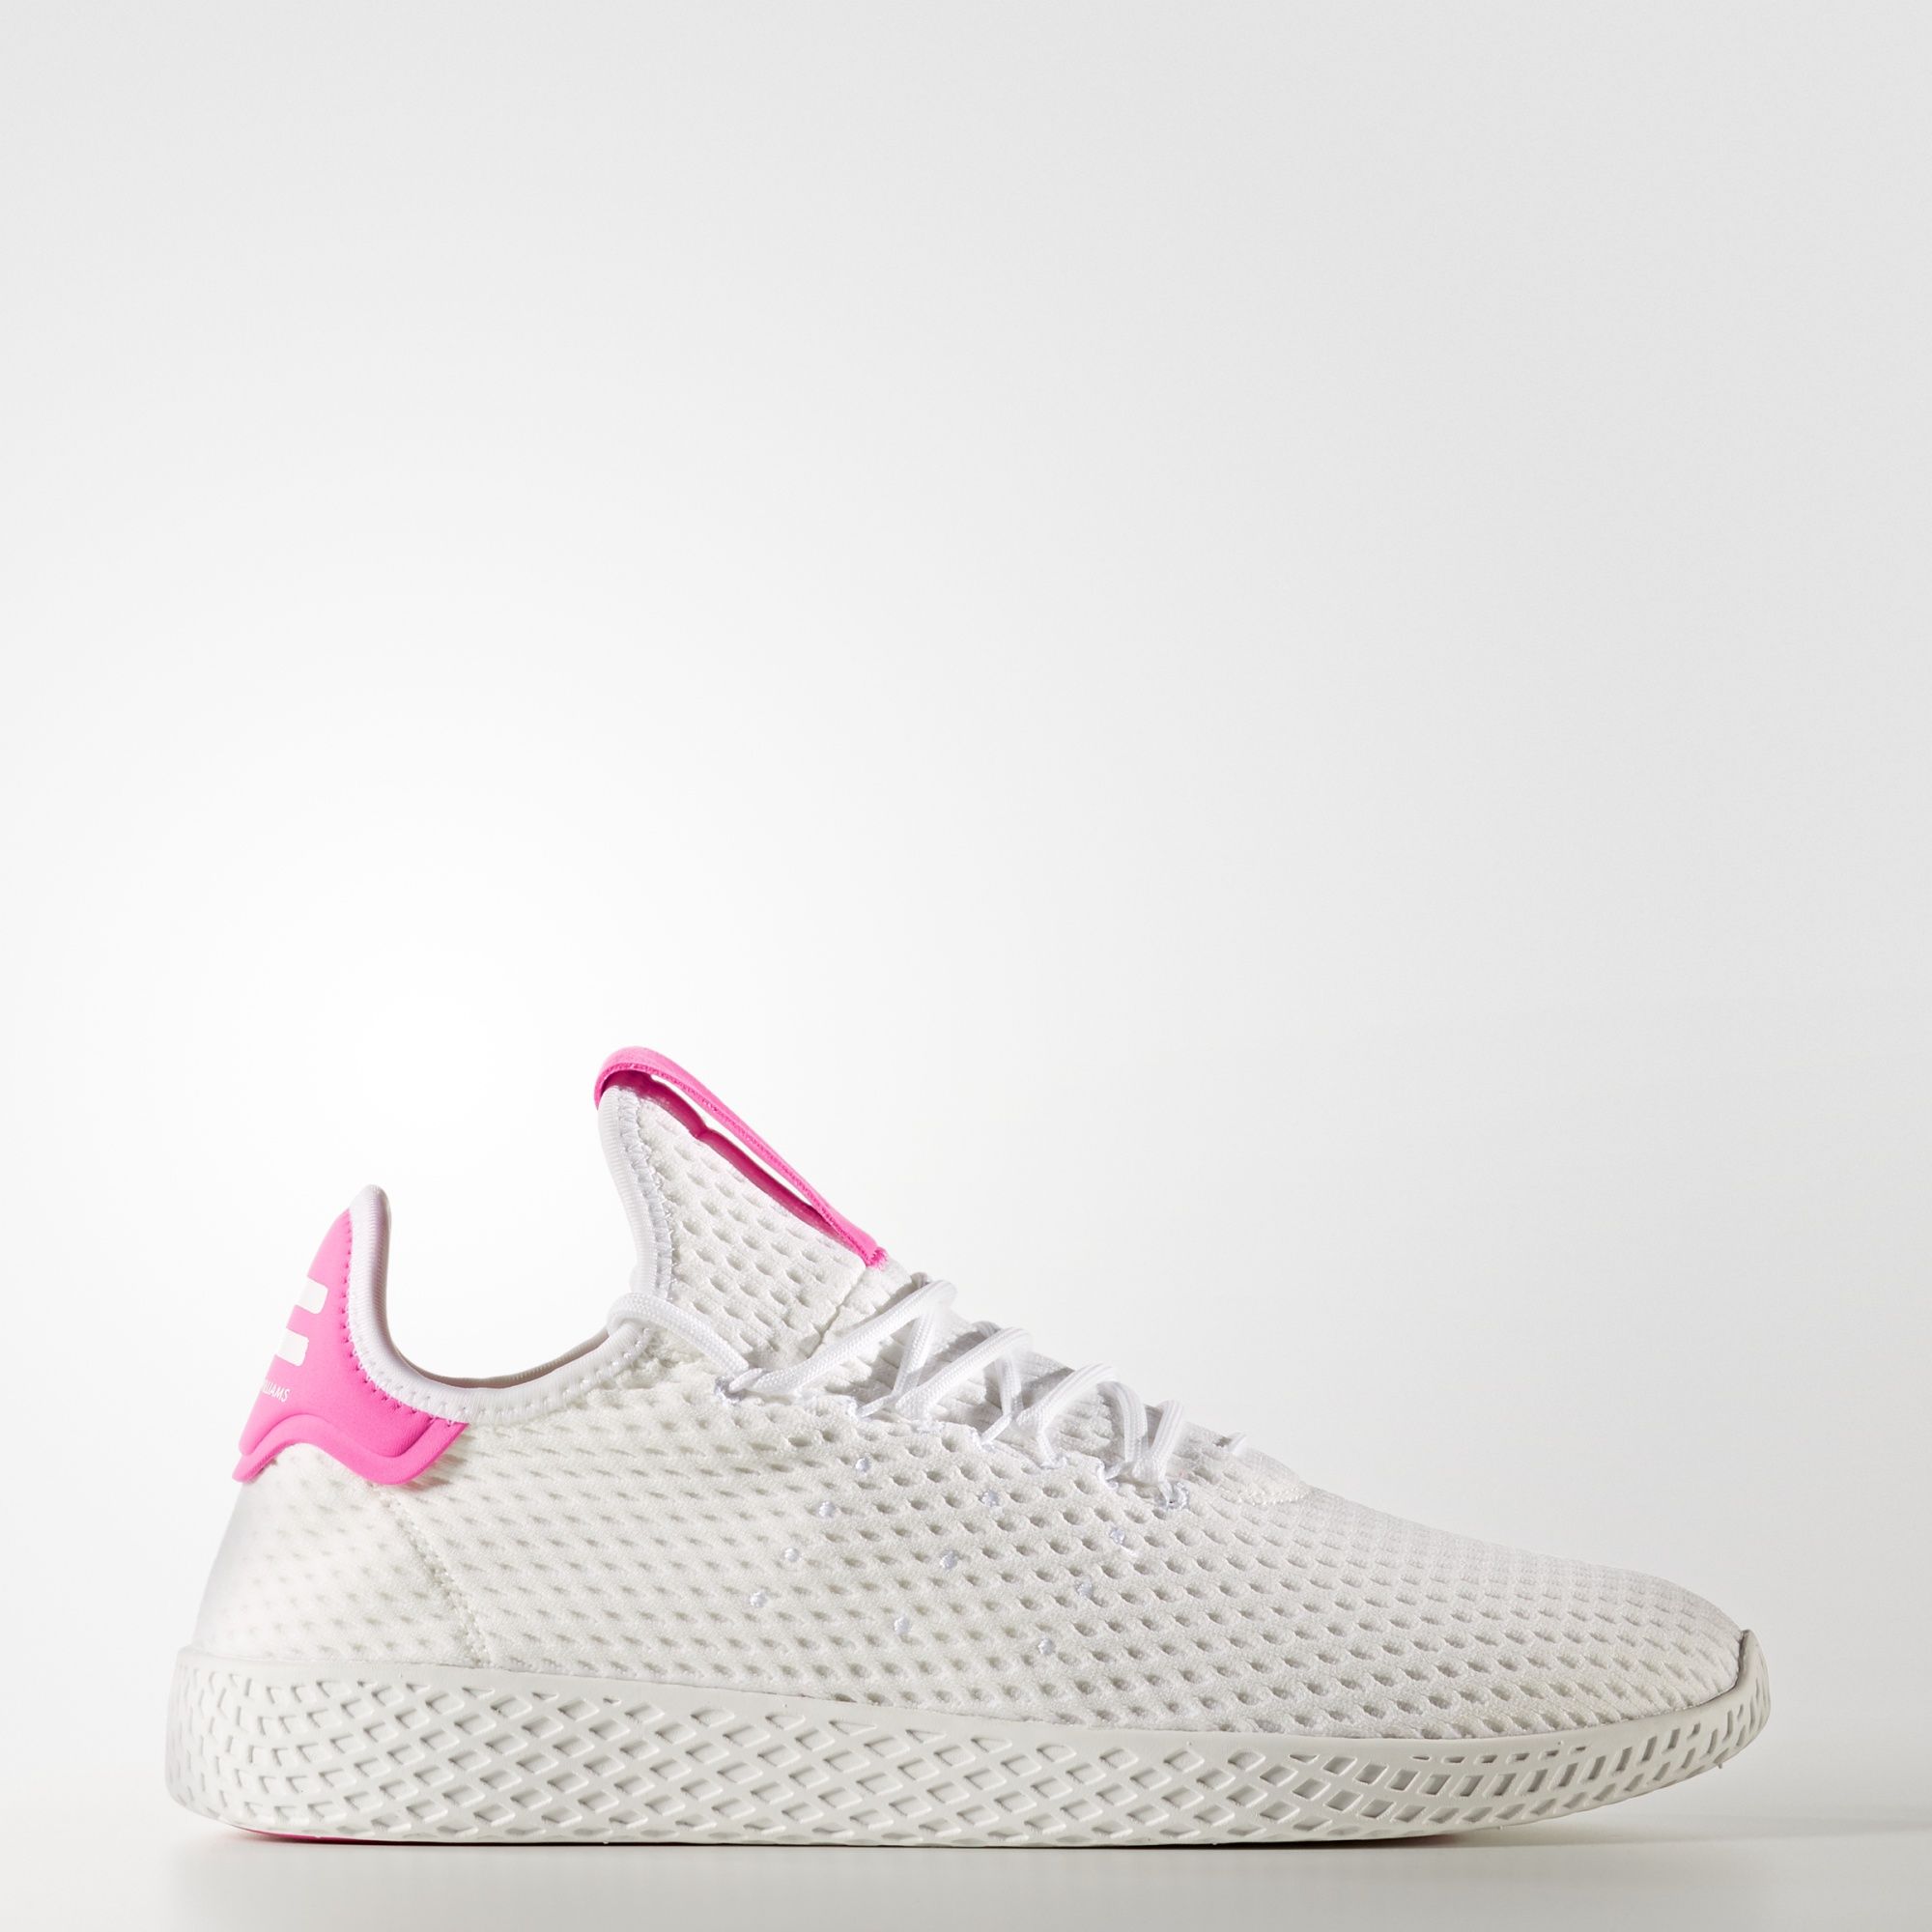 adidas-pharrell-williams-tennis-hu-white-semi-solar-pink-2